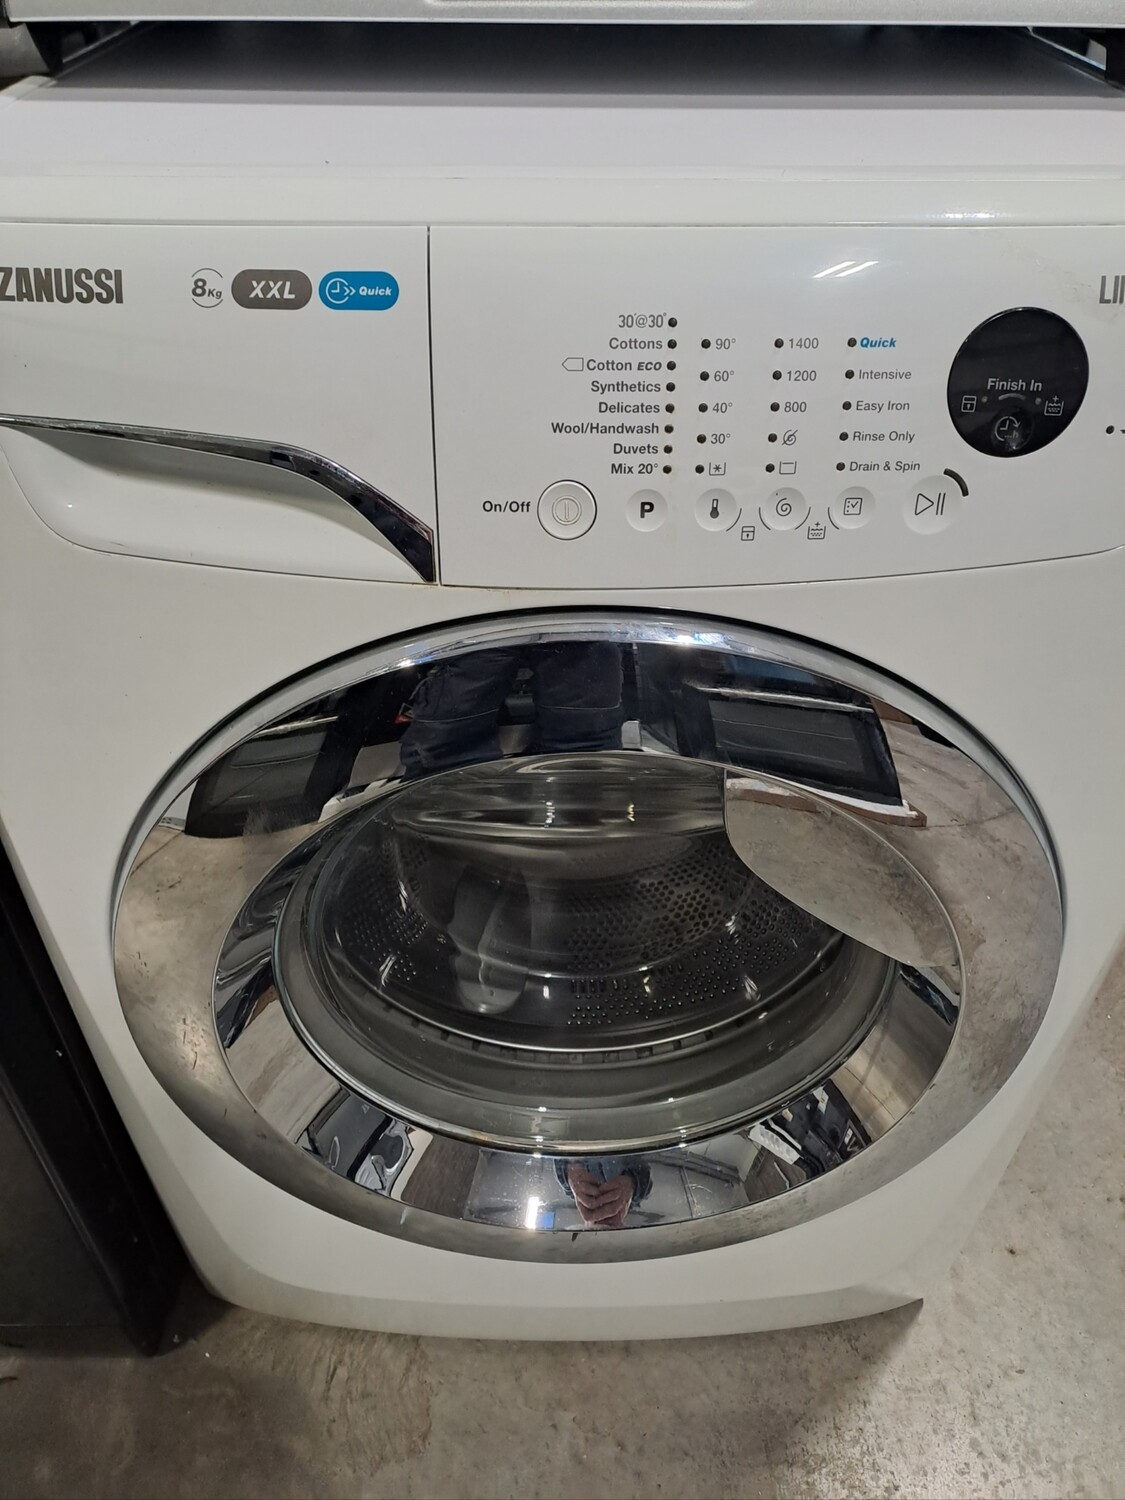 Zanussi Lindo300 XXL 8kg Load 1400 Spin Washing Machine - White - Refurbished - 6 Month Guarantee